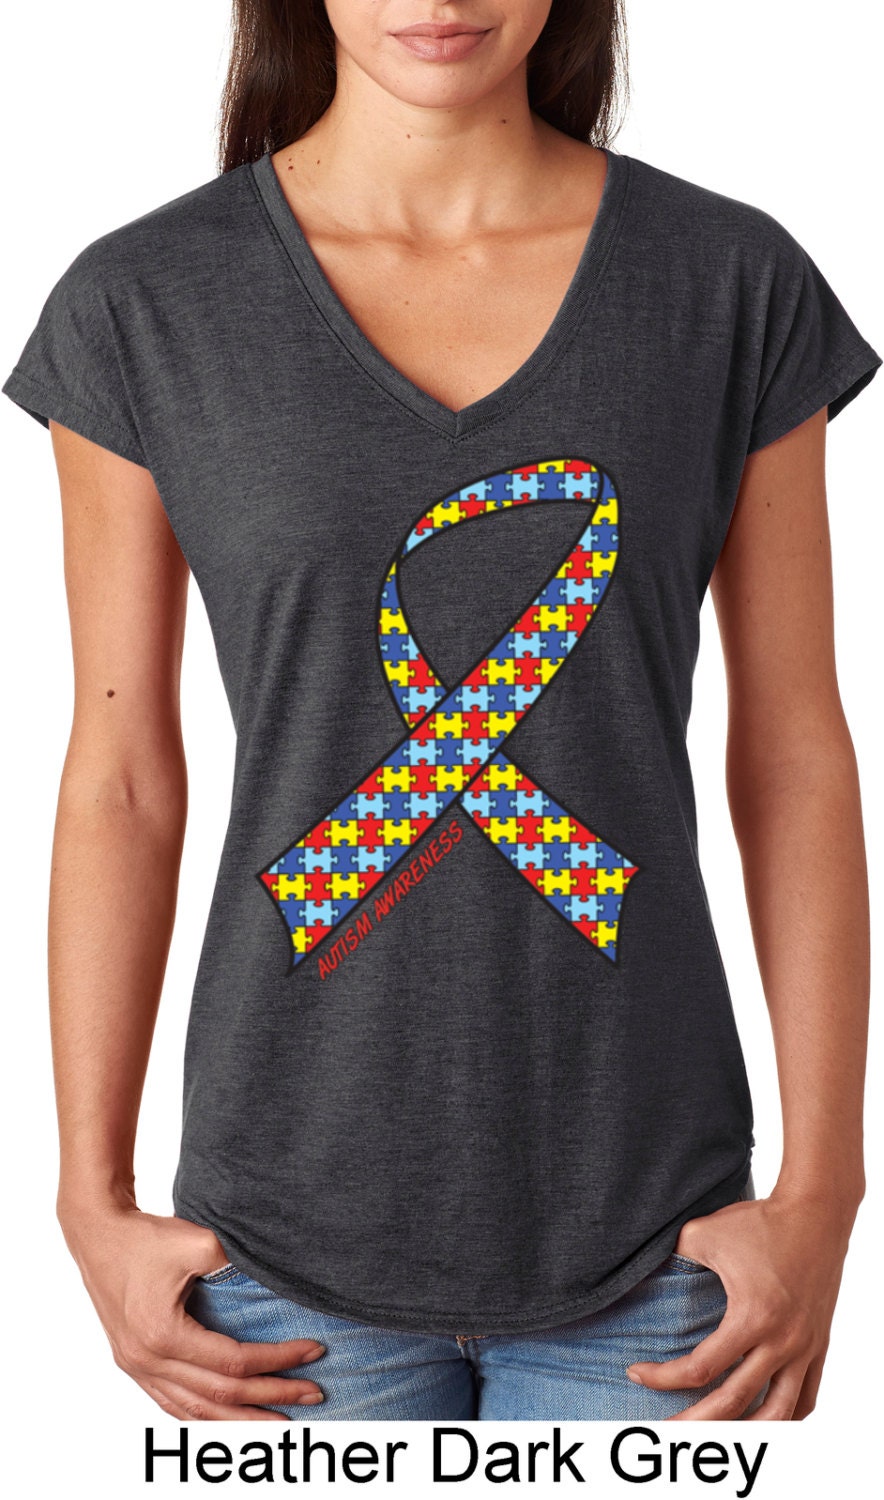 Autism Awareness Ribbon Ladies Tri-Blend V-Neck Tee T-Shirt 17975Hd2-6750Vl